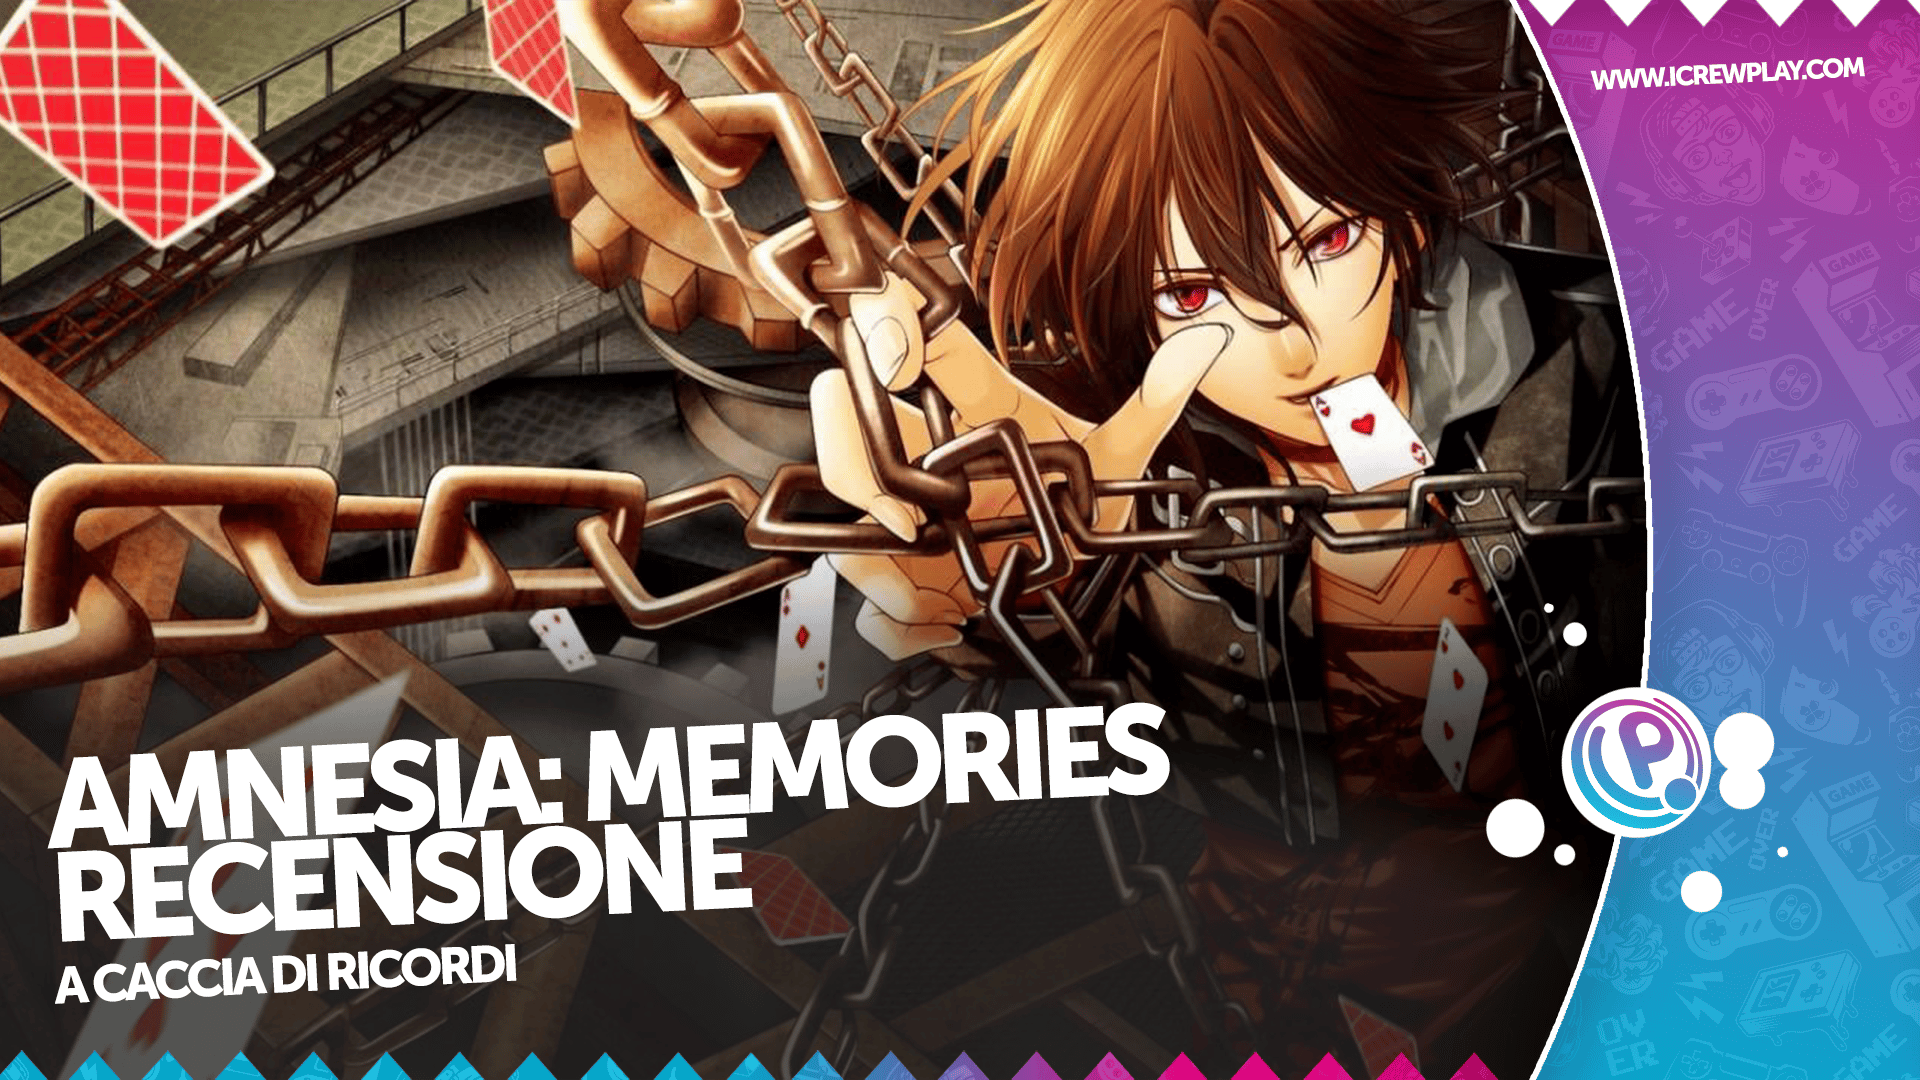 Amnesia: Memories recensione per Nintendo Switch 28